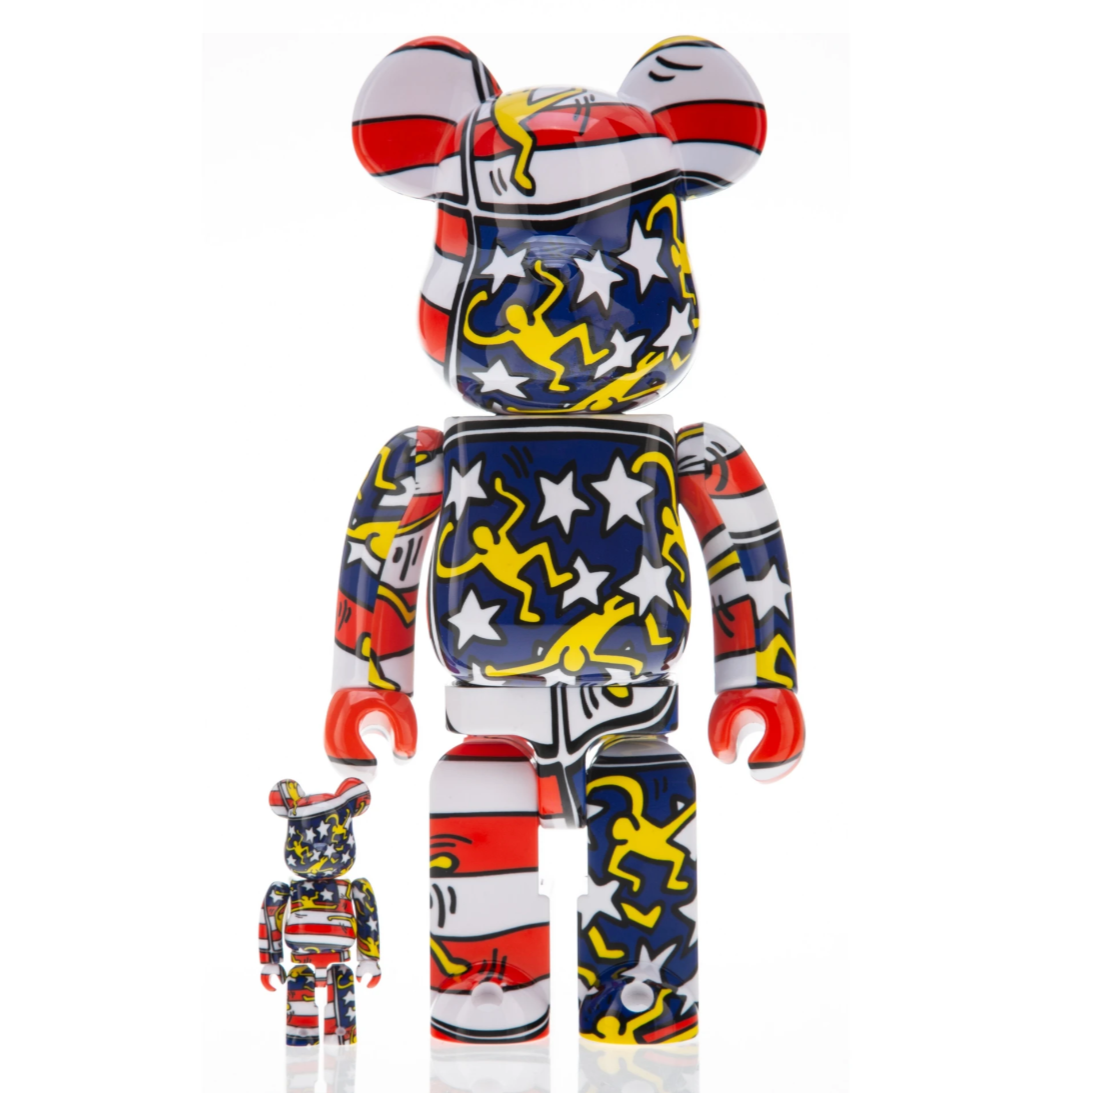 Keith Haring #7 100% + 400% Bearbrick Set by Medicom Toy